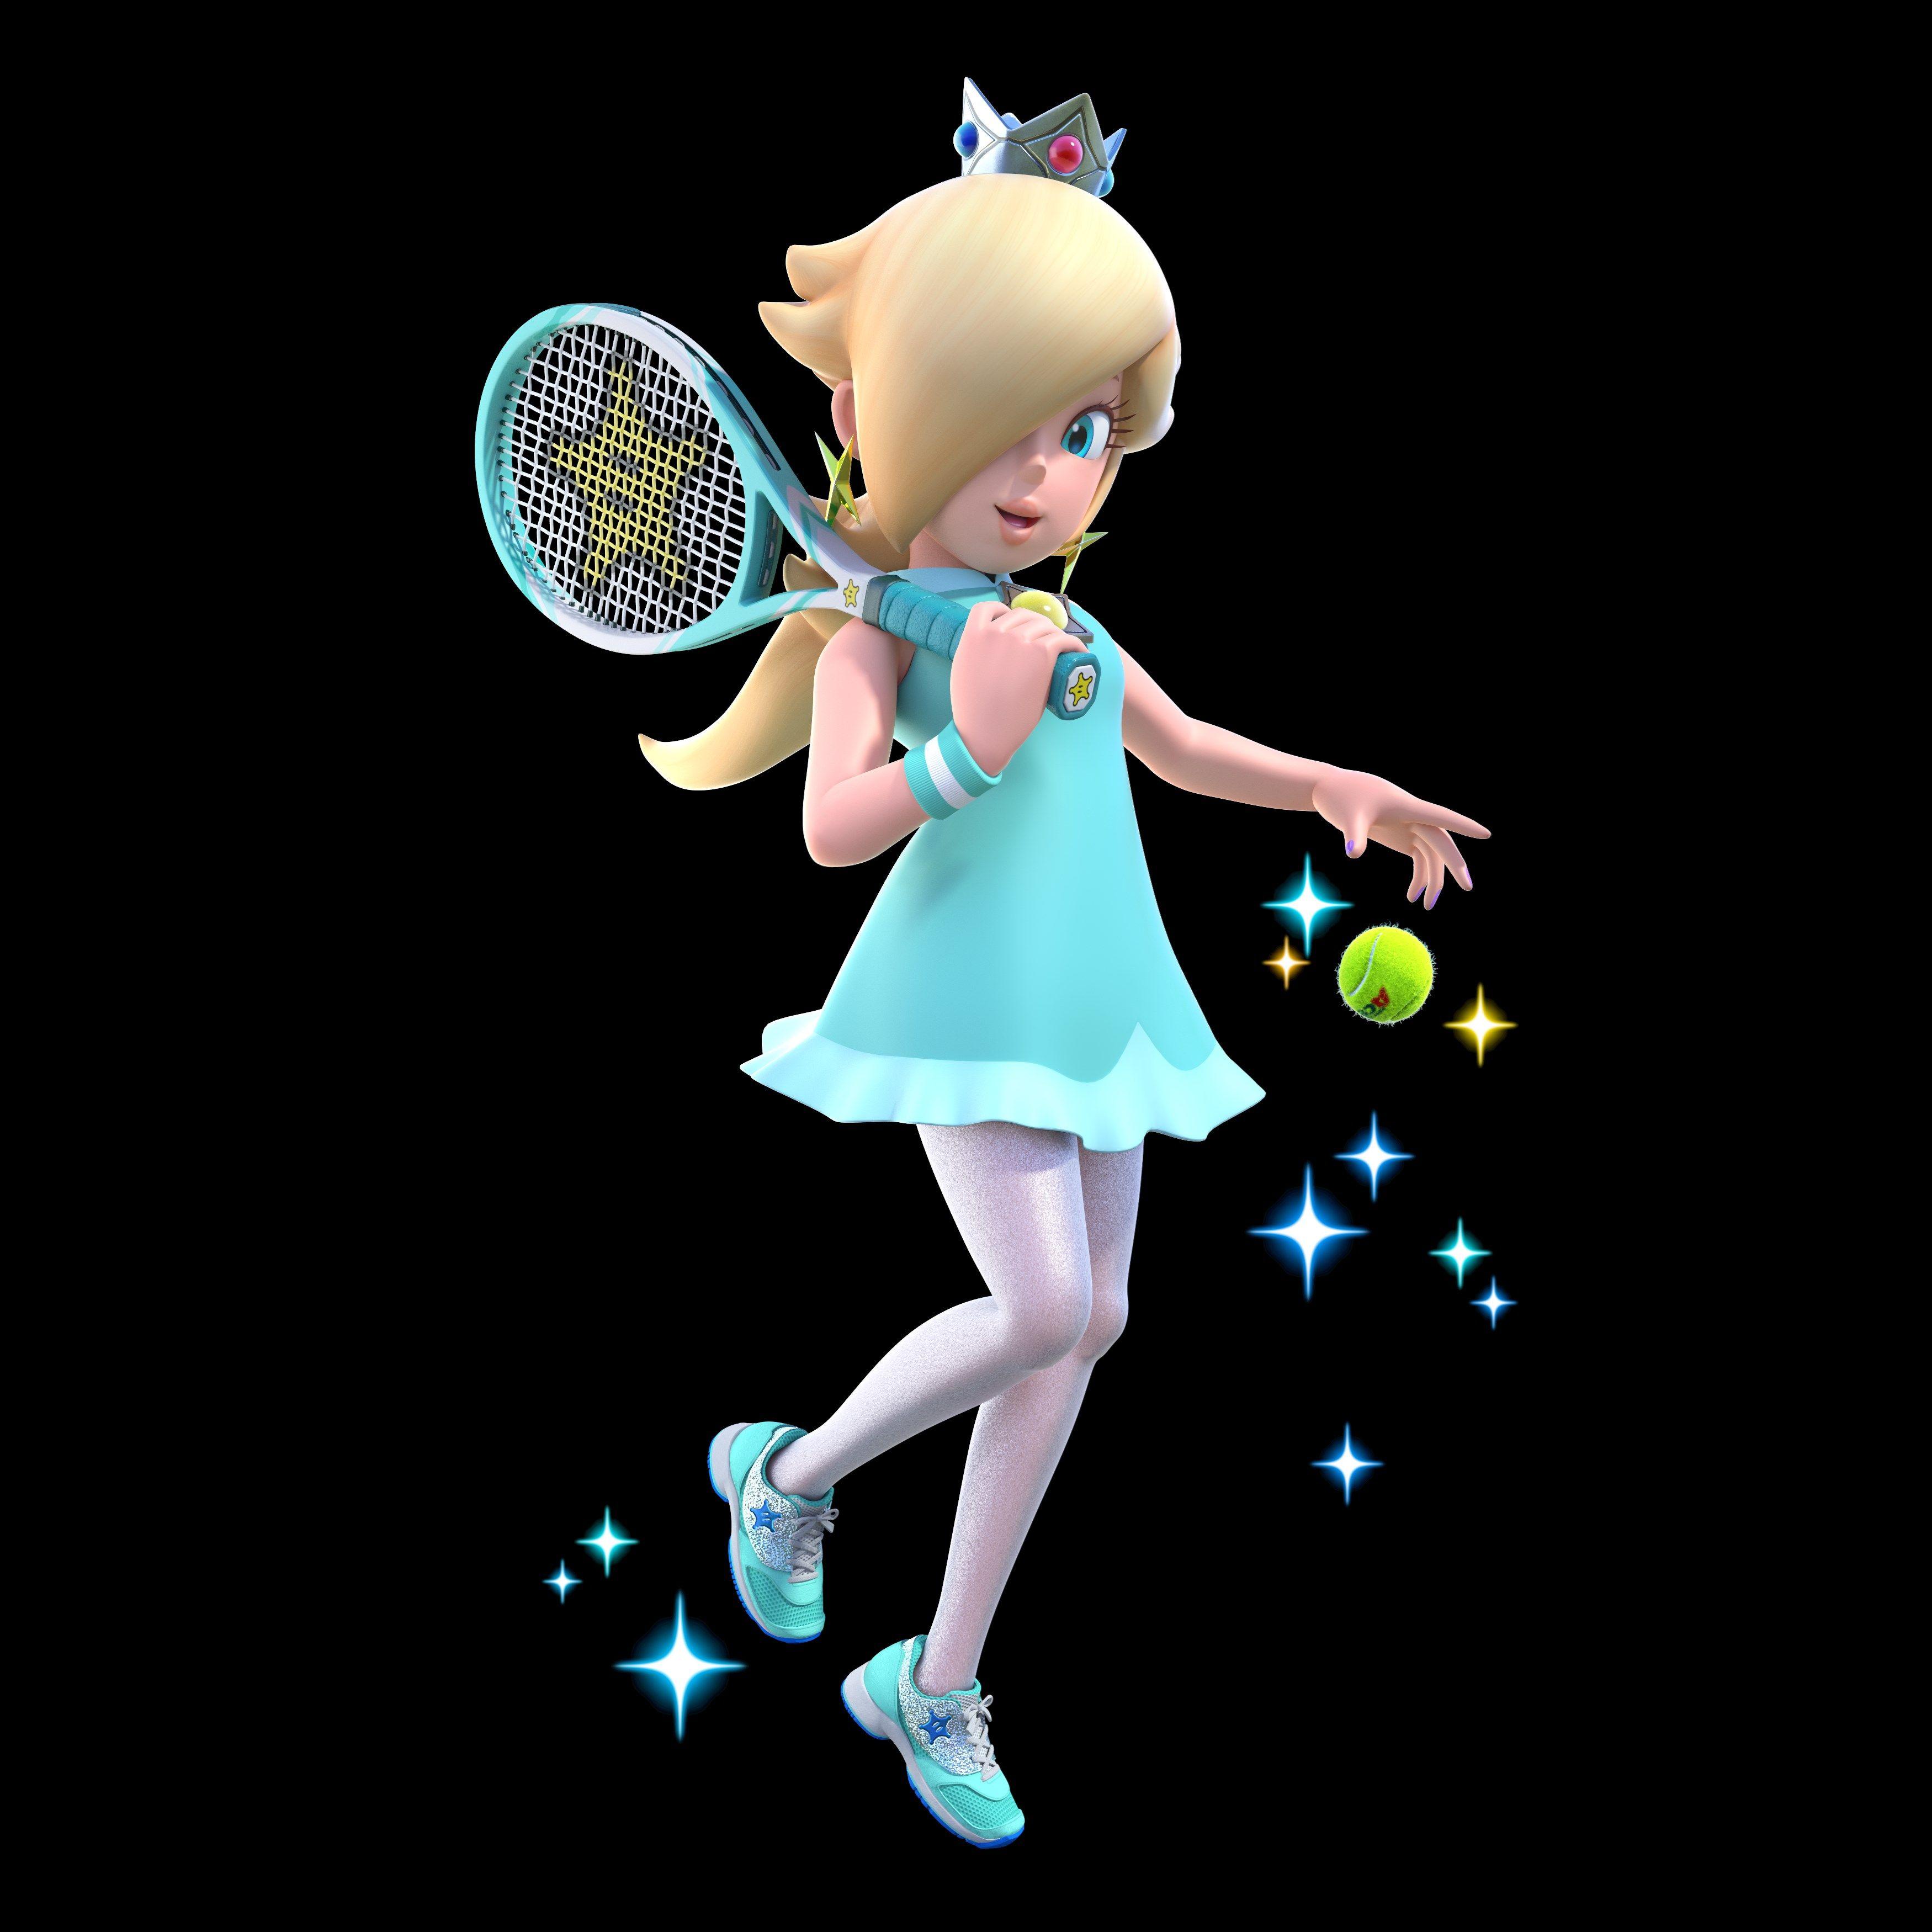 North American Mario Tennis Aces boxart, screenshots, character art